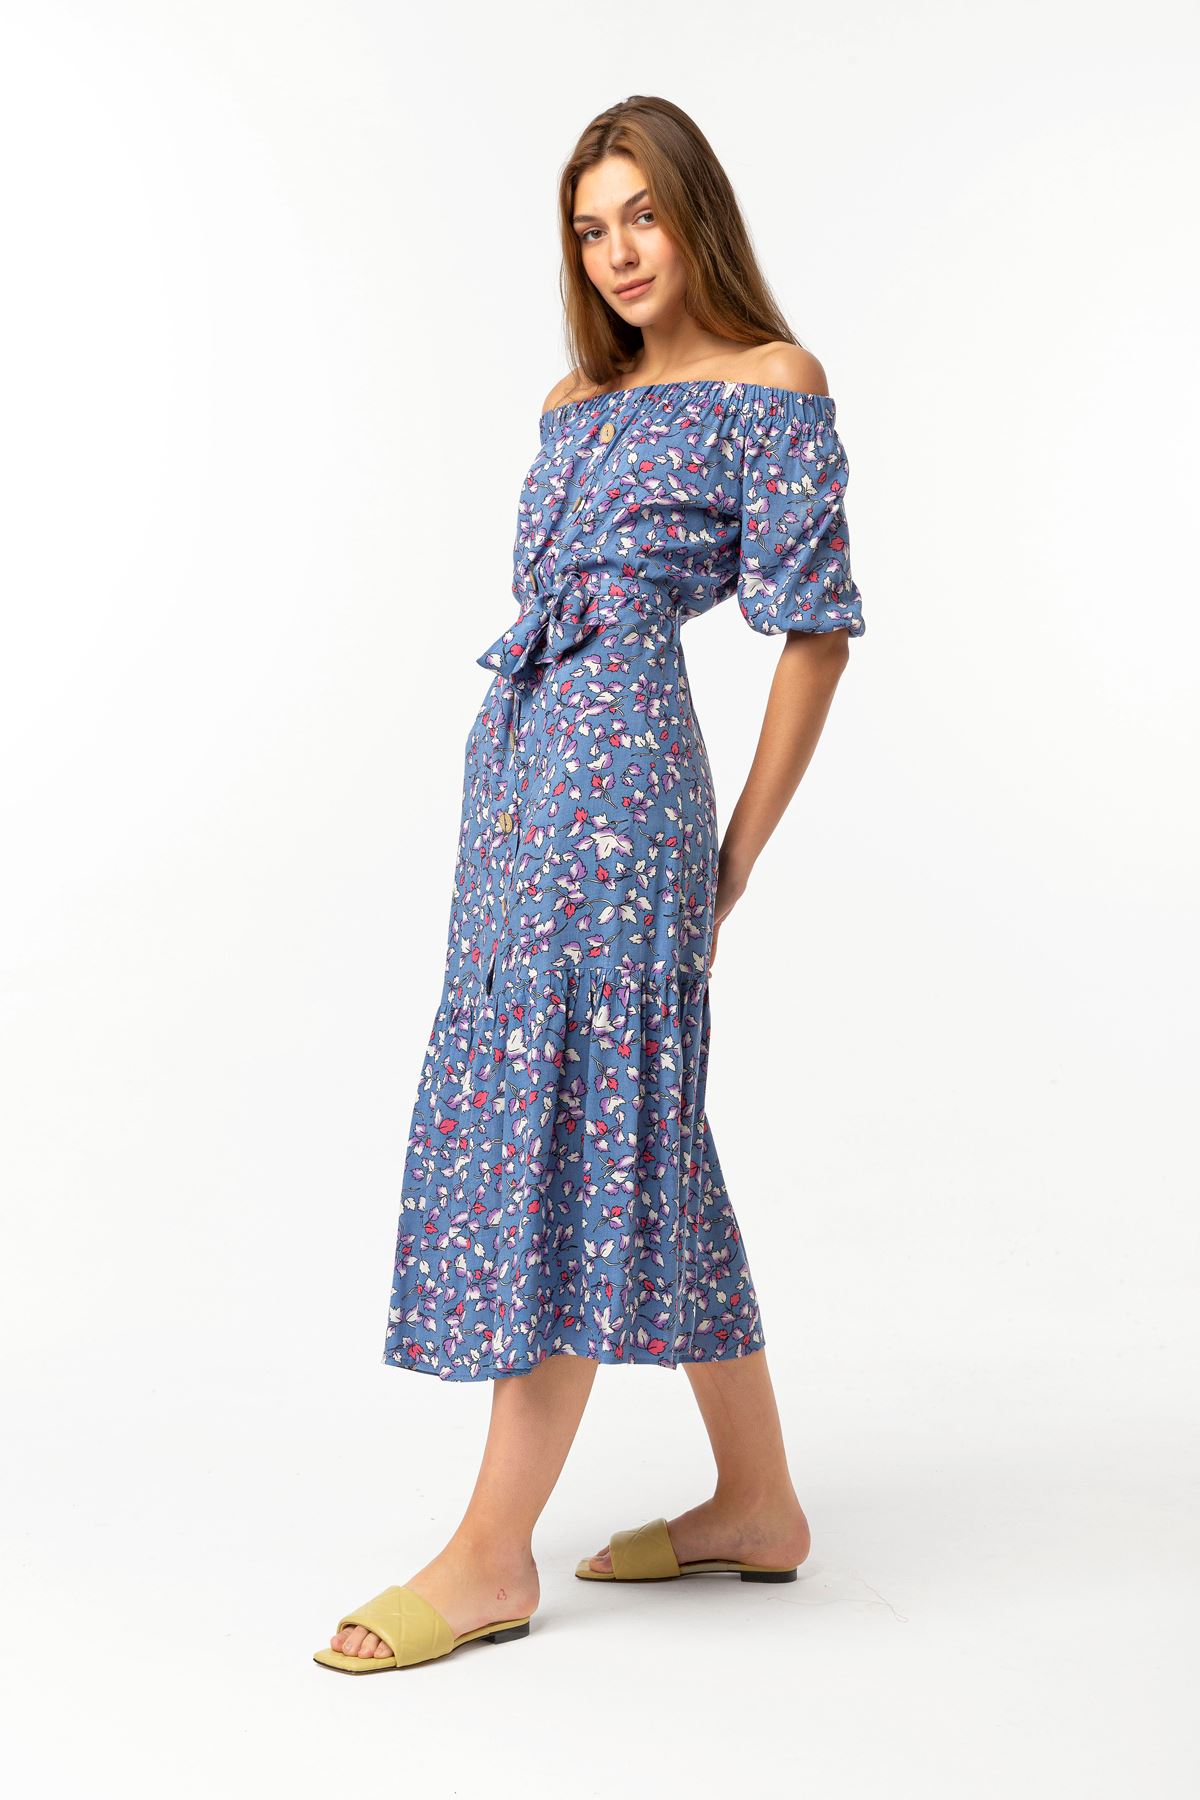 Viscose Fabric Short Sleeve Boat Neck Midi Comfy Flower Print Women Dress - Blue